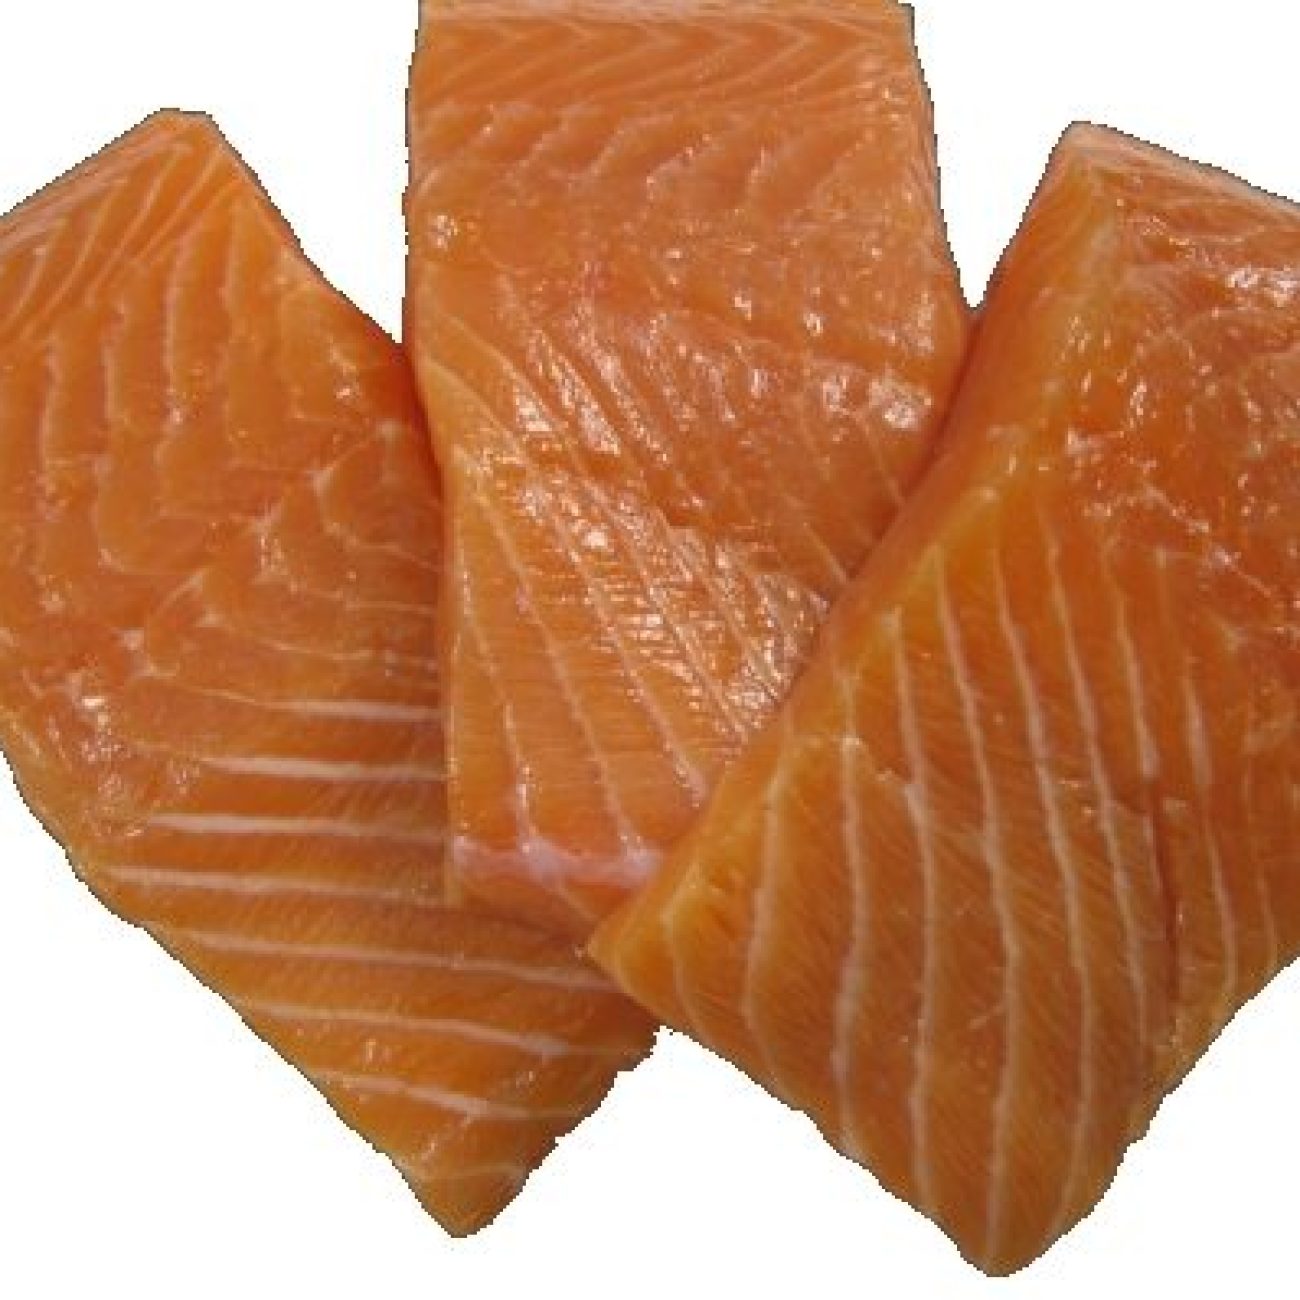 Salmon Fillets Canadiana